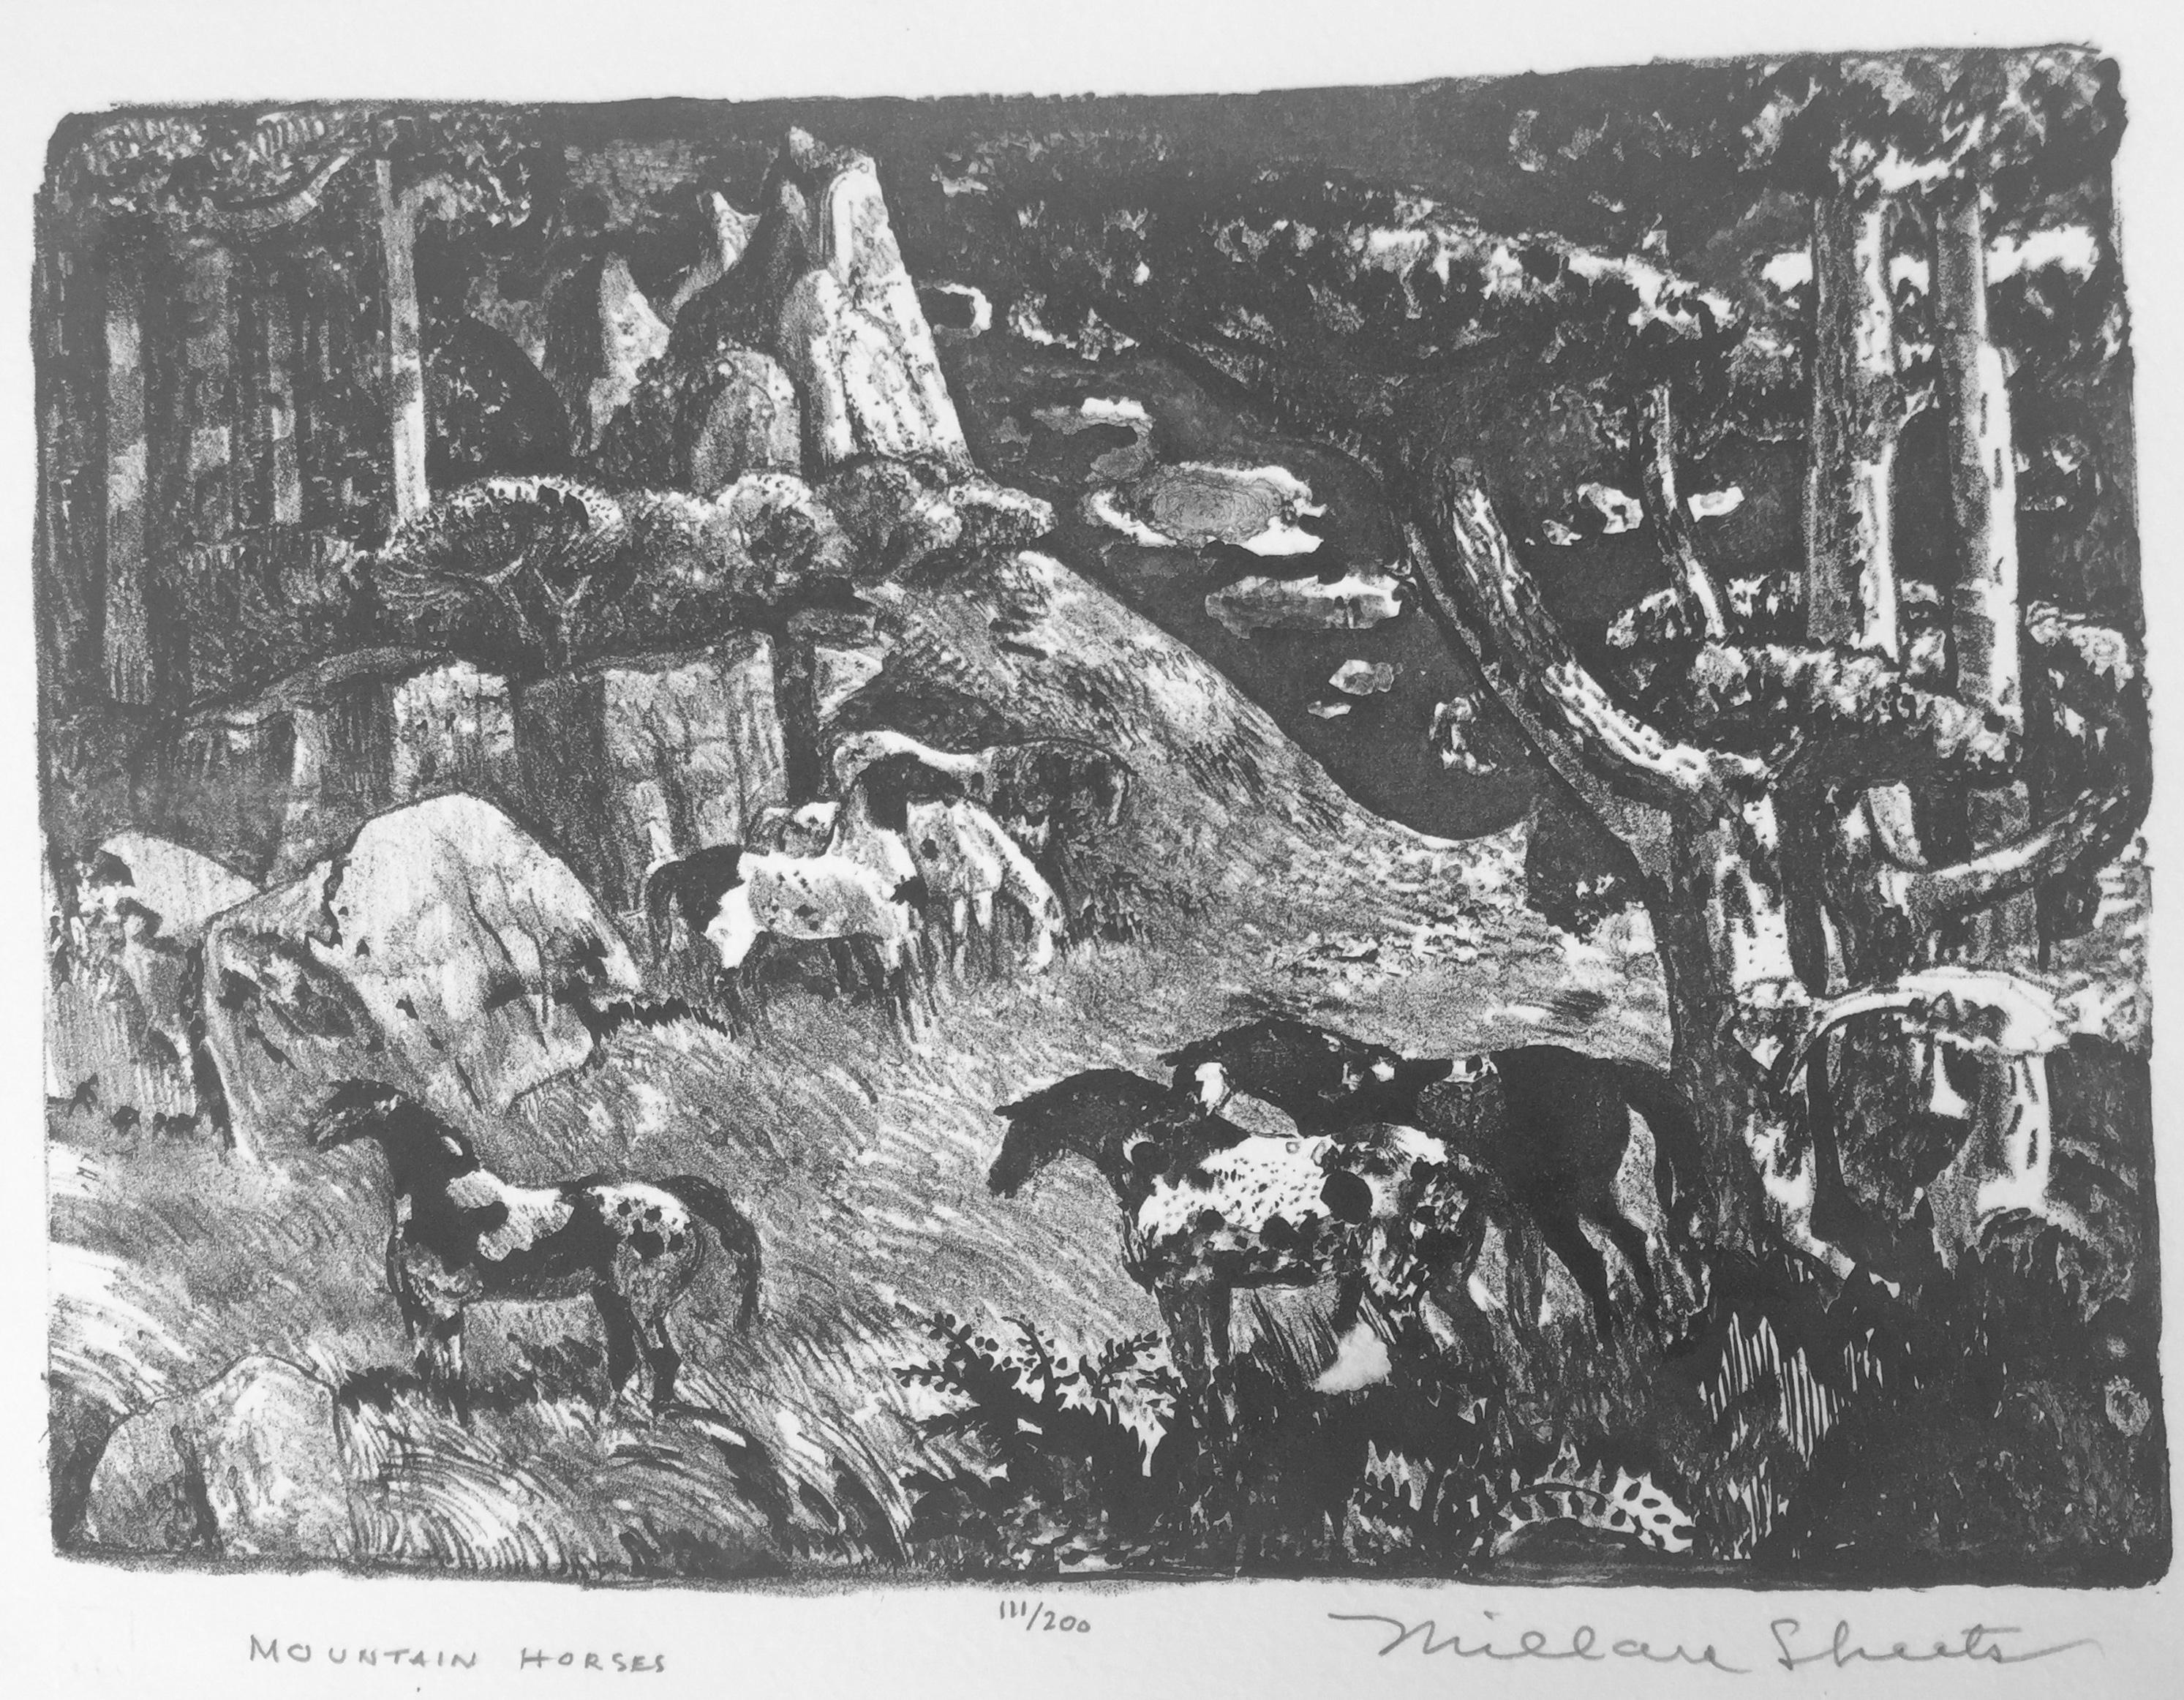 MOUNTAIN HORSES - Gray Landscape Print by Millard Sheets